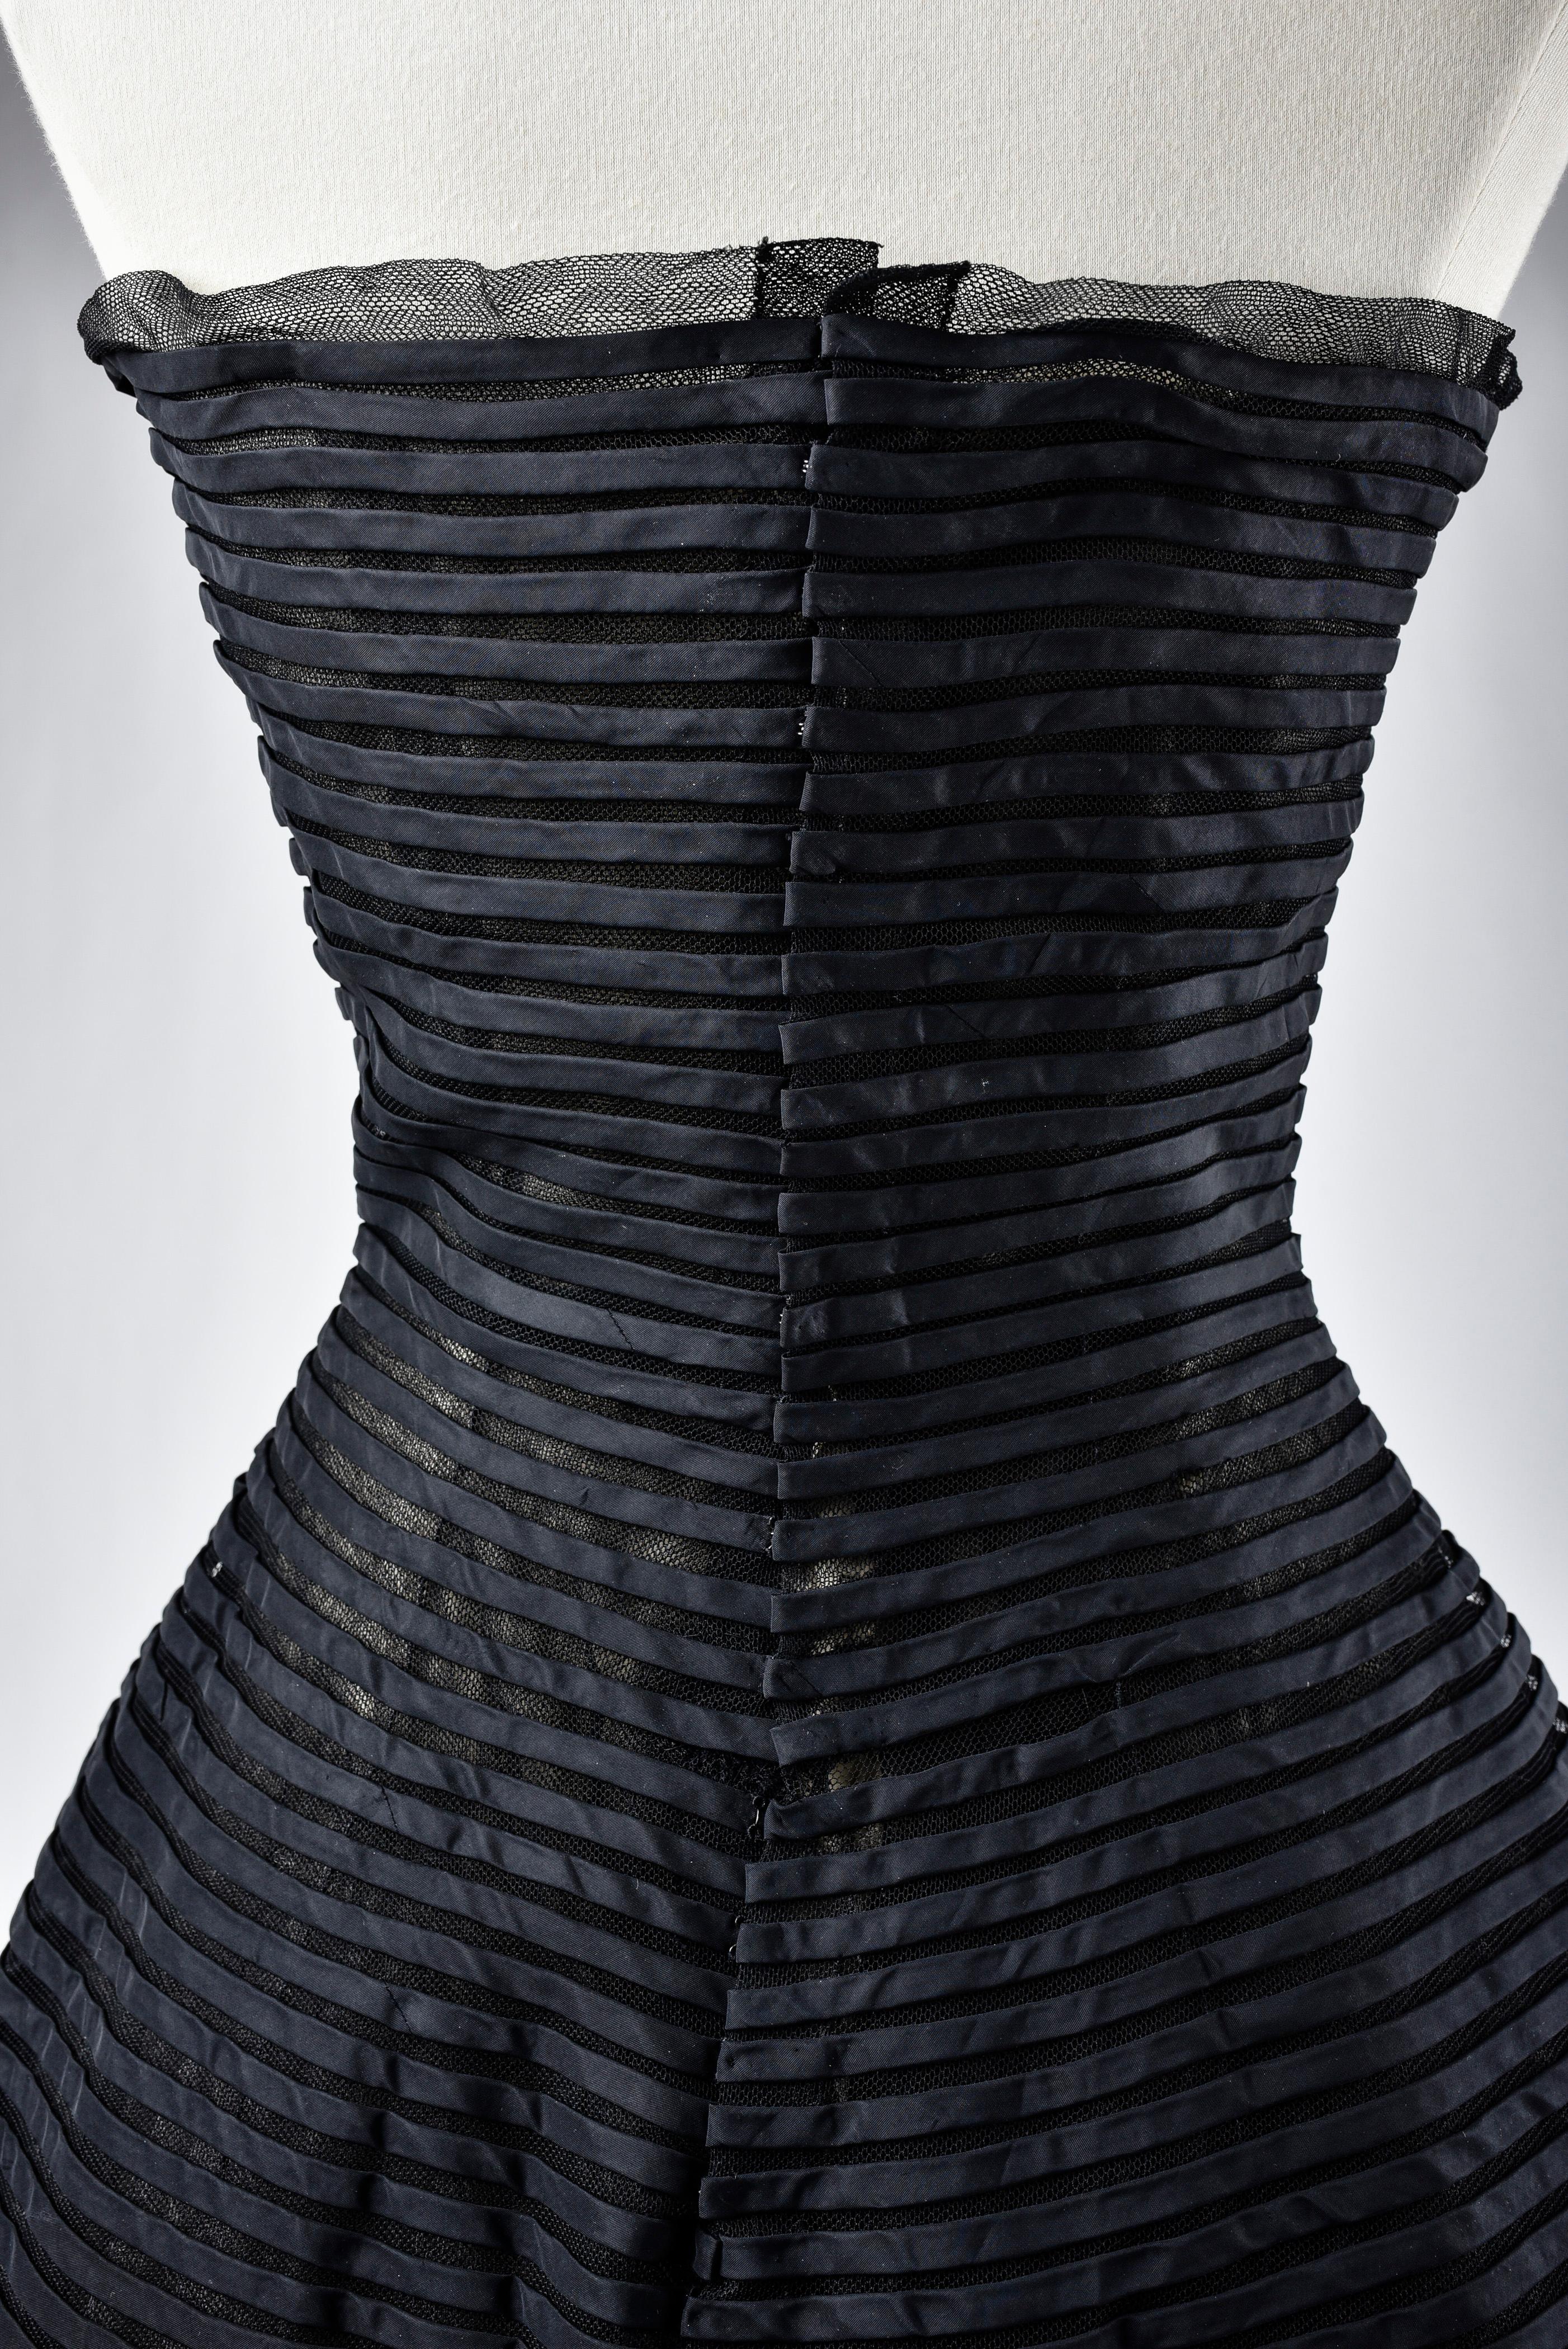 Christian Dior Ball Gown in black tulle & satin appliqué N° 363404 Circa 1955 6